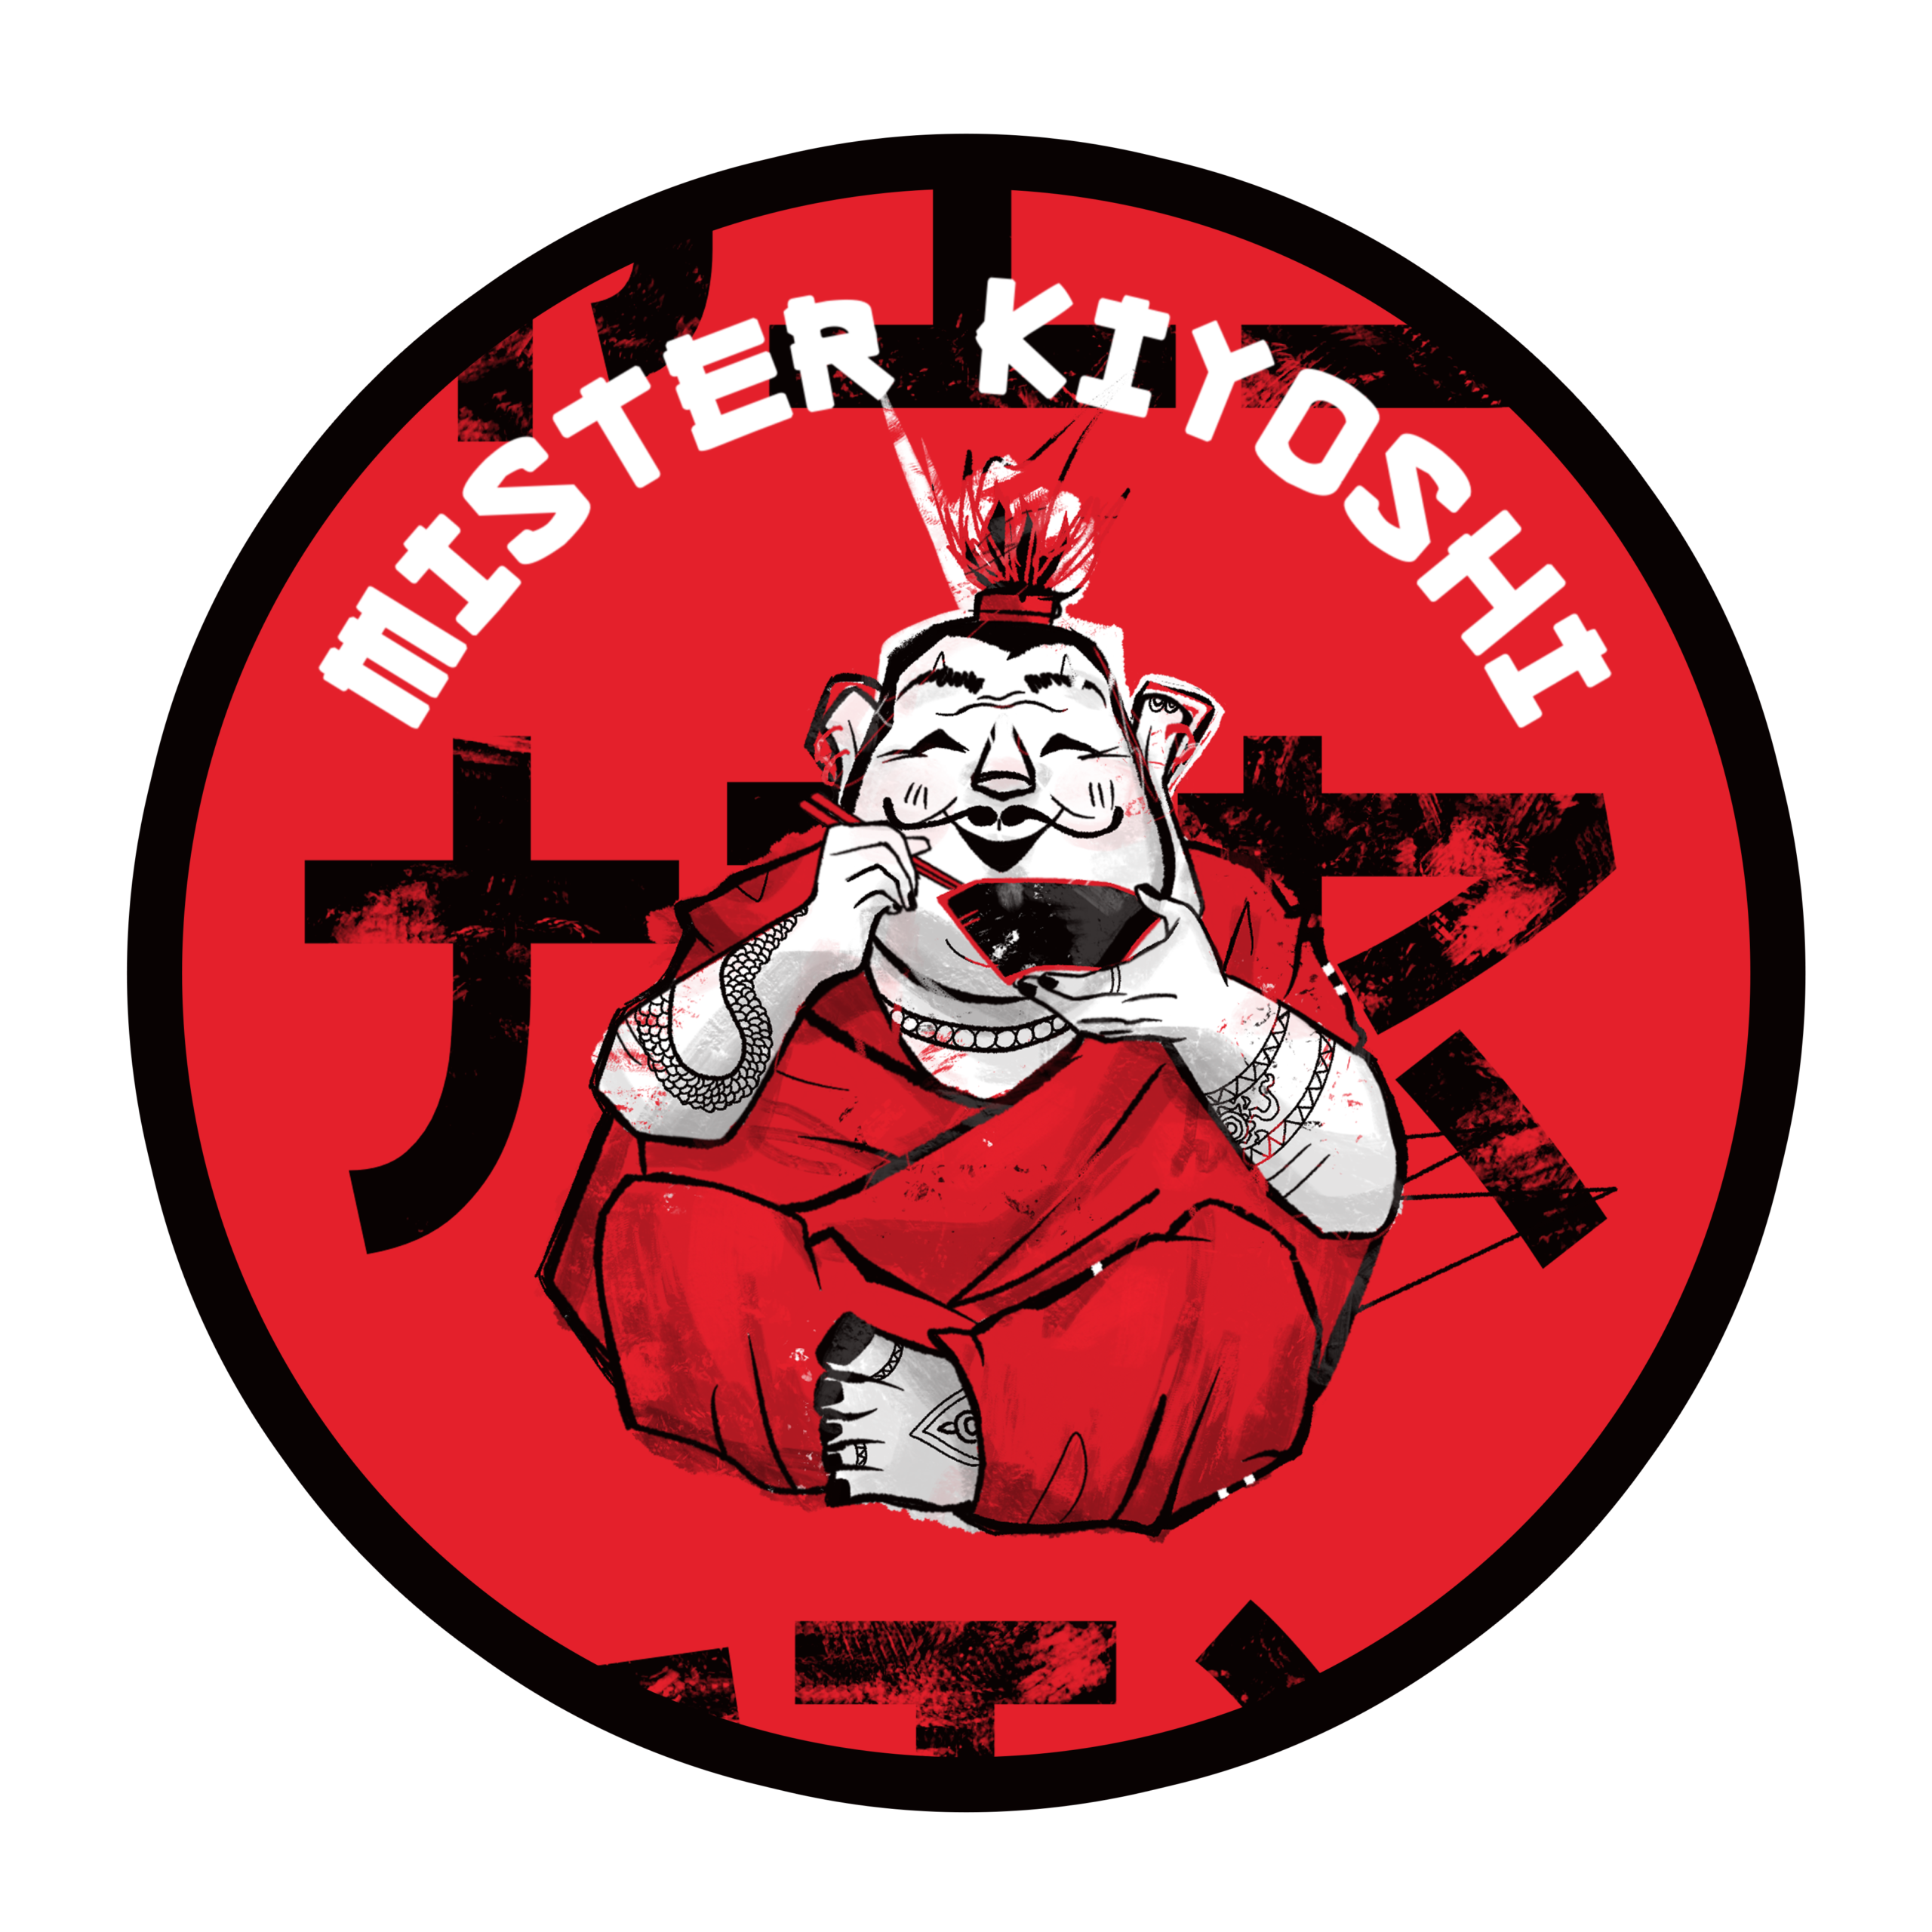 Mister kiyoshi